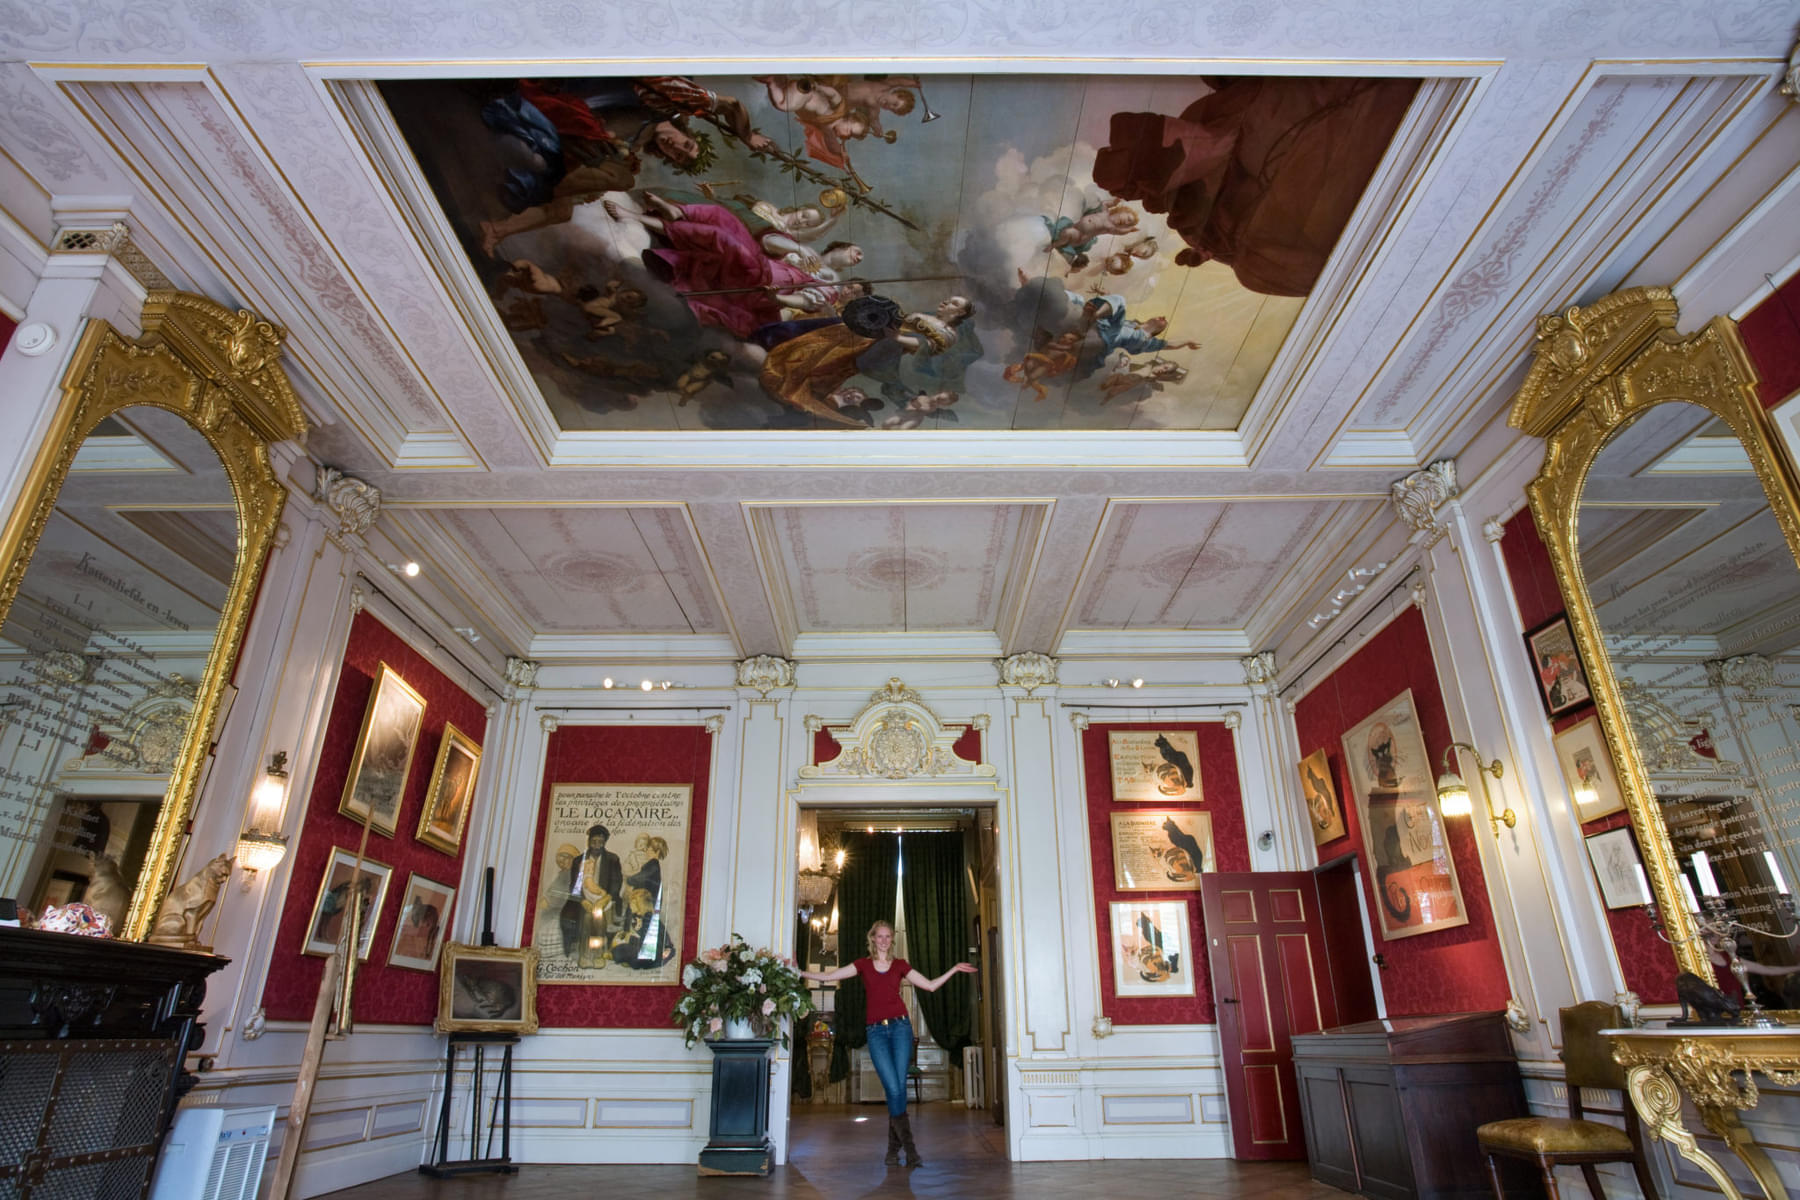 Admire the beautiful interior of the museum